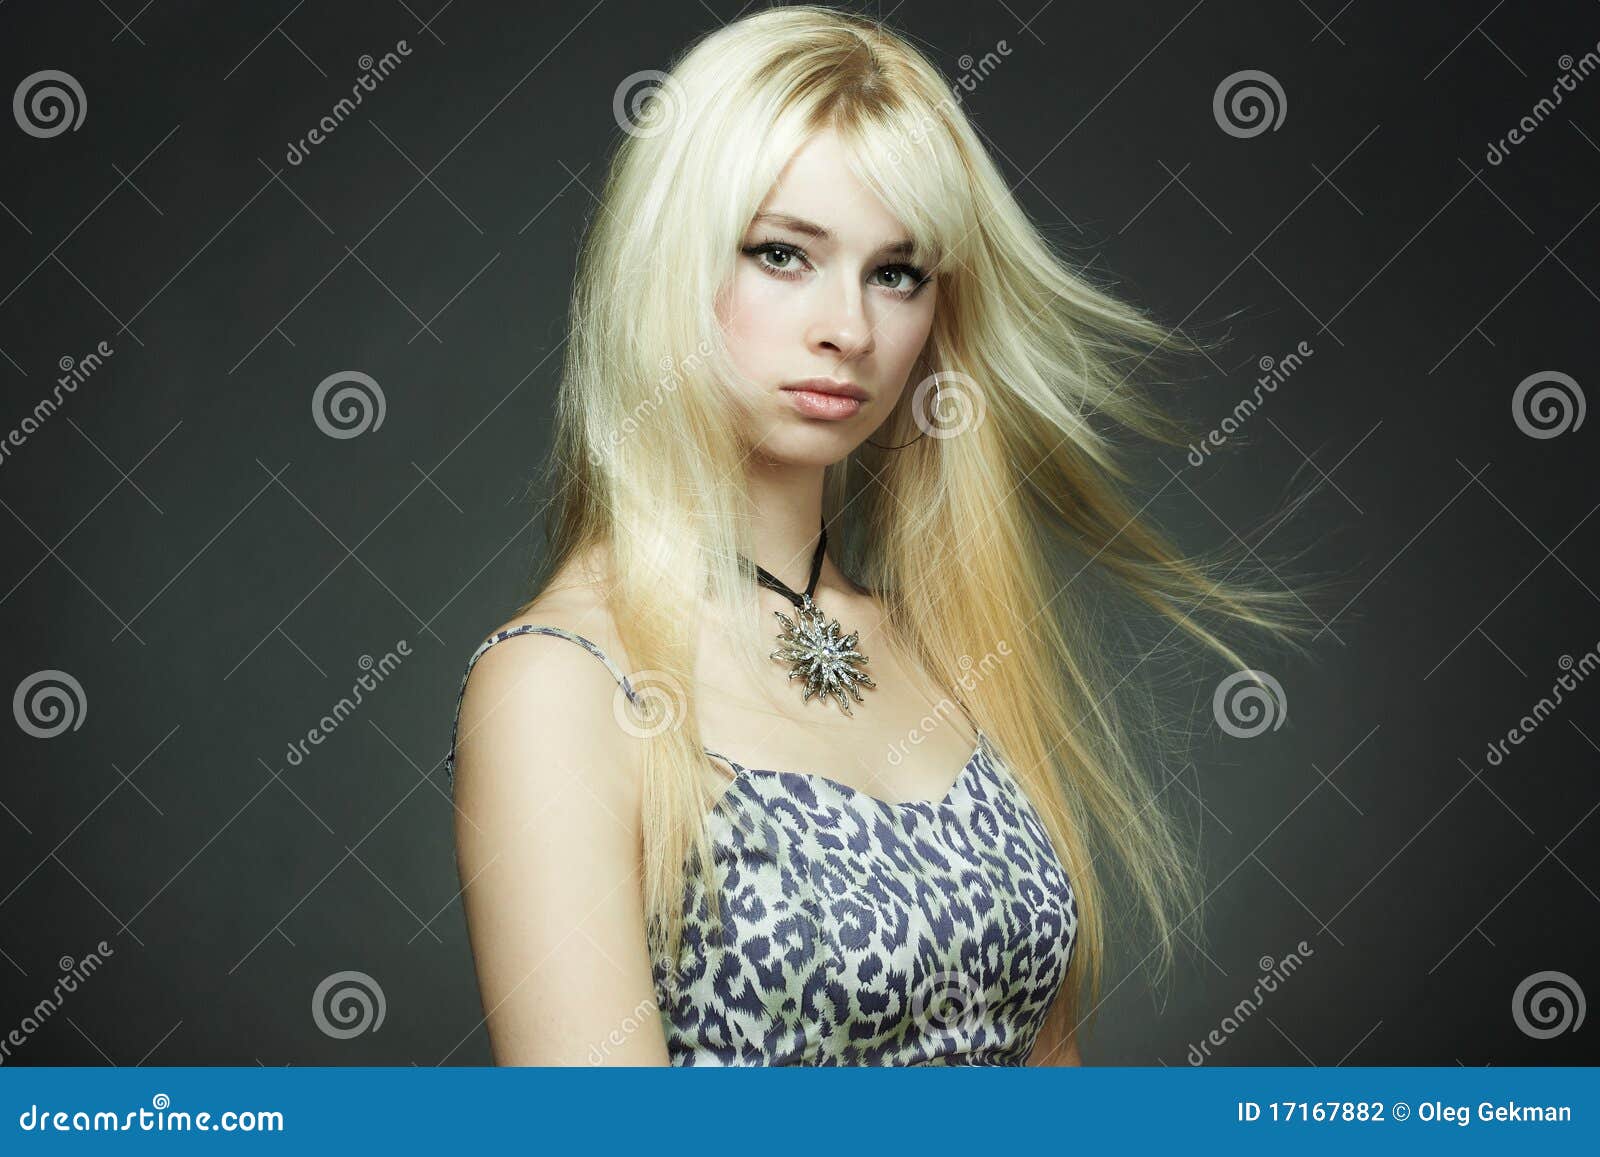 Stockfoto med beskrivningen Seductive blond-haired woman with